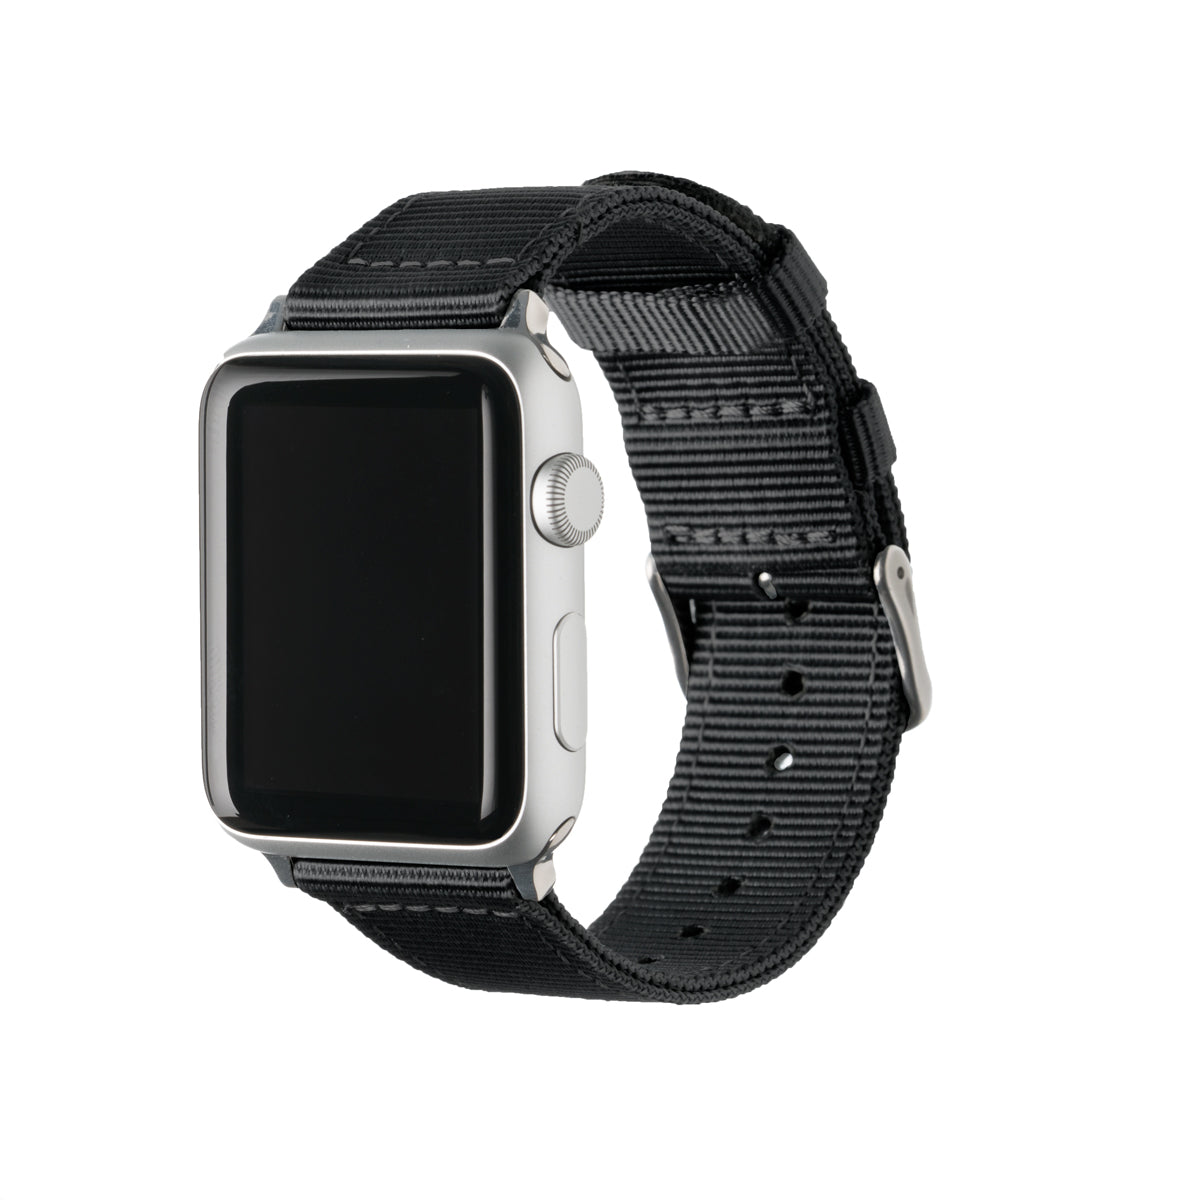 Archer Watch Straps - Premium Nylon Bands for Apple Watch